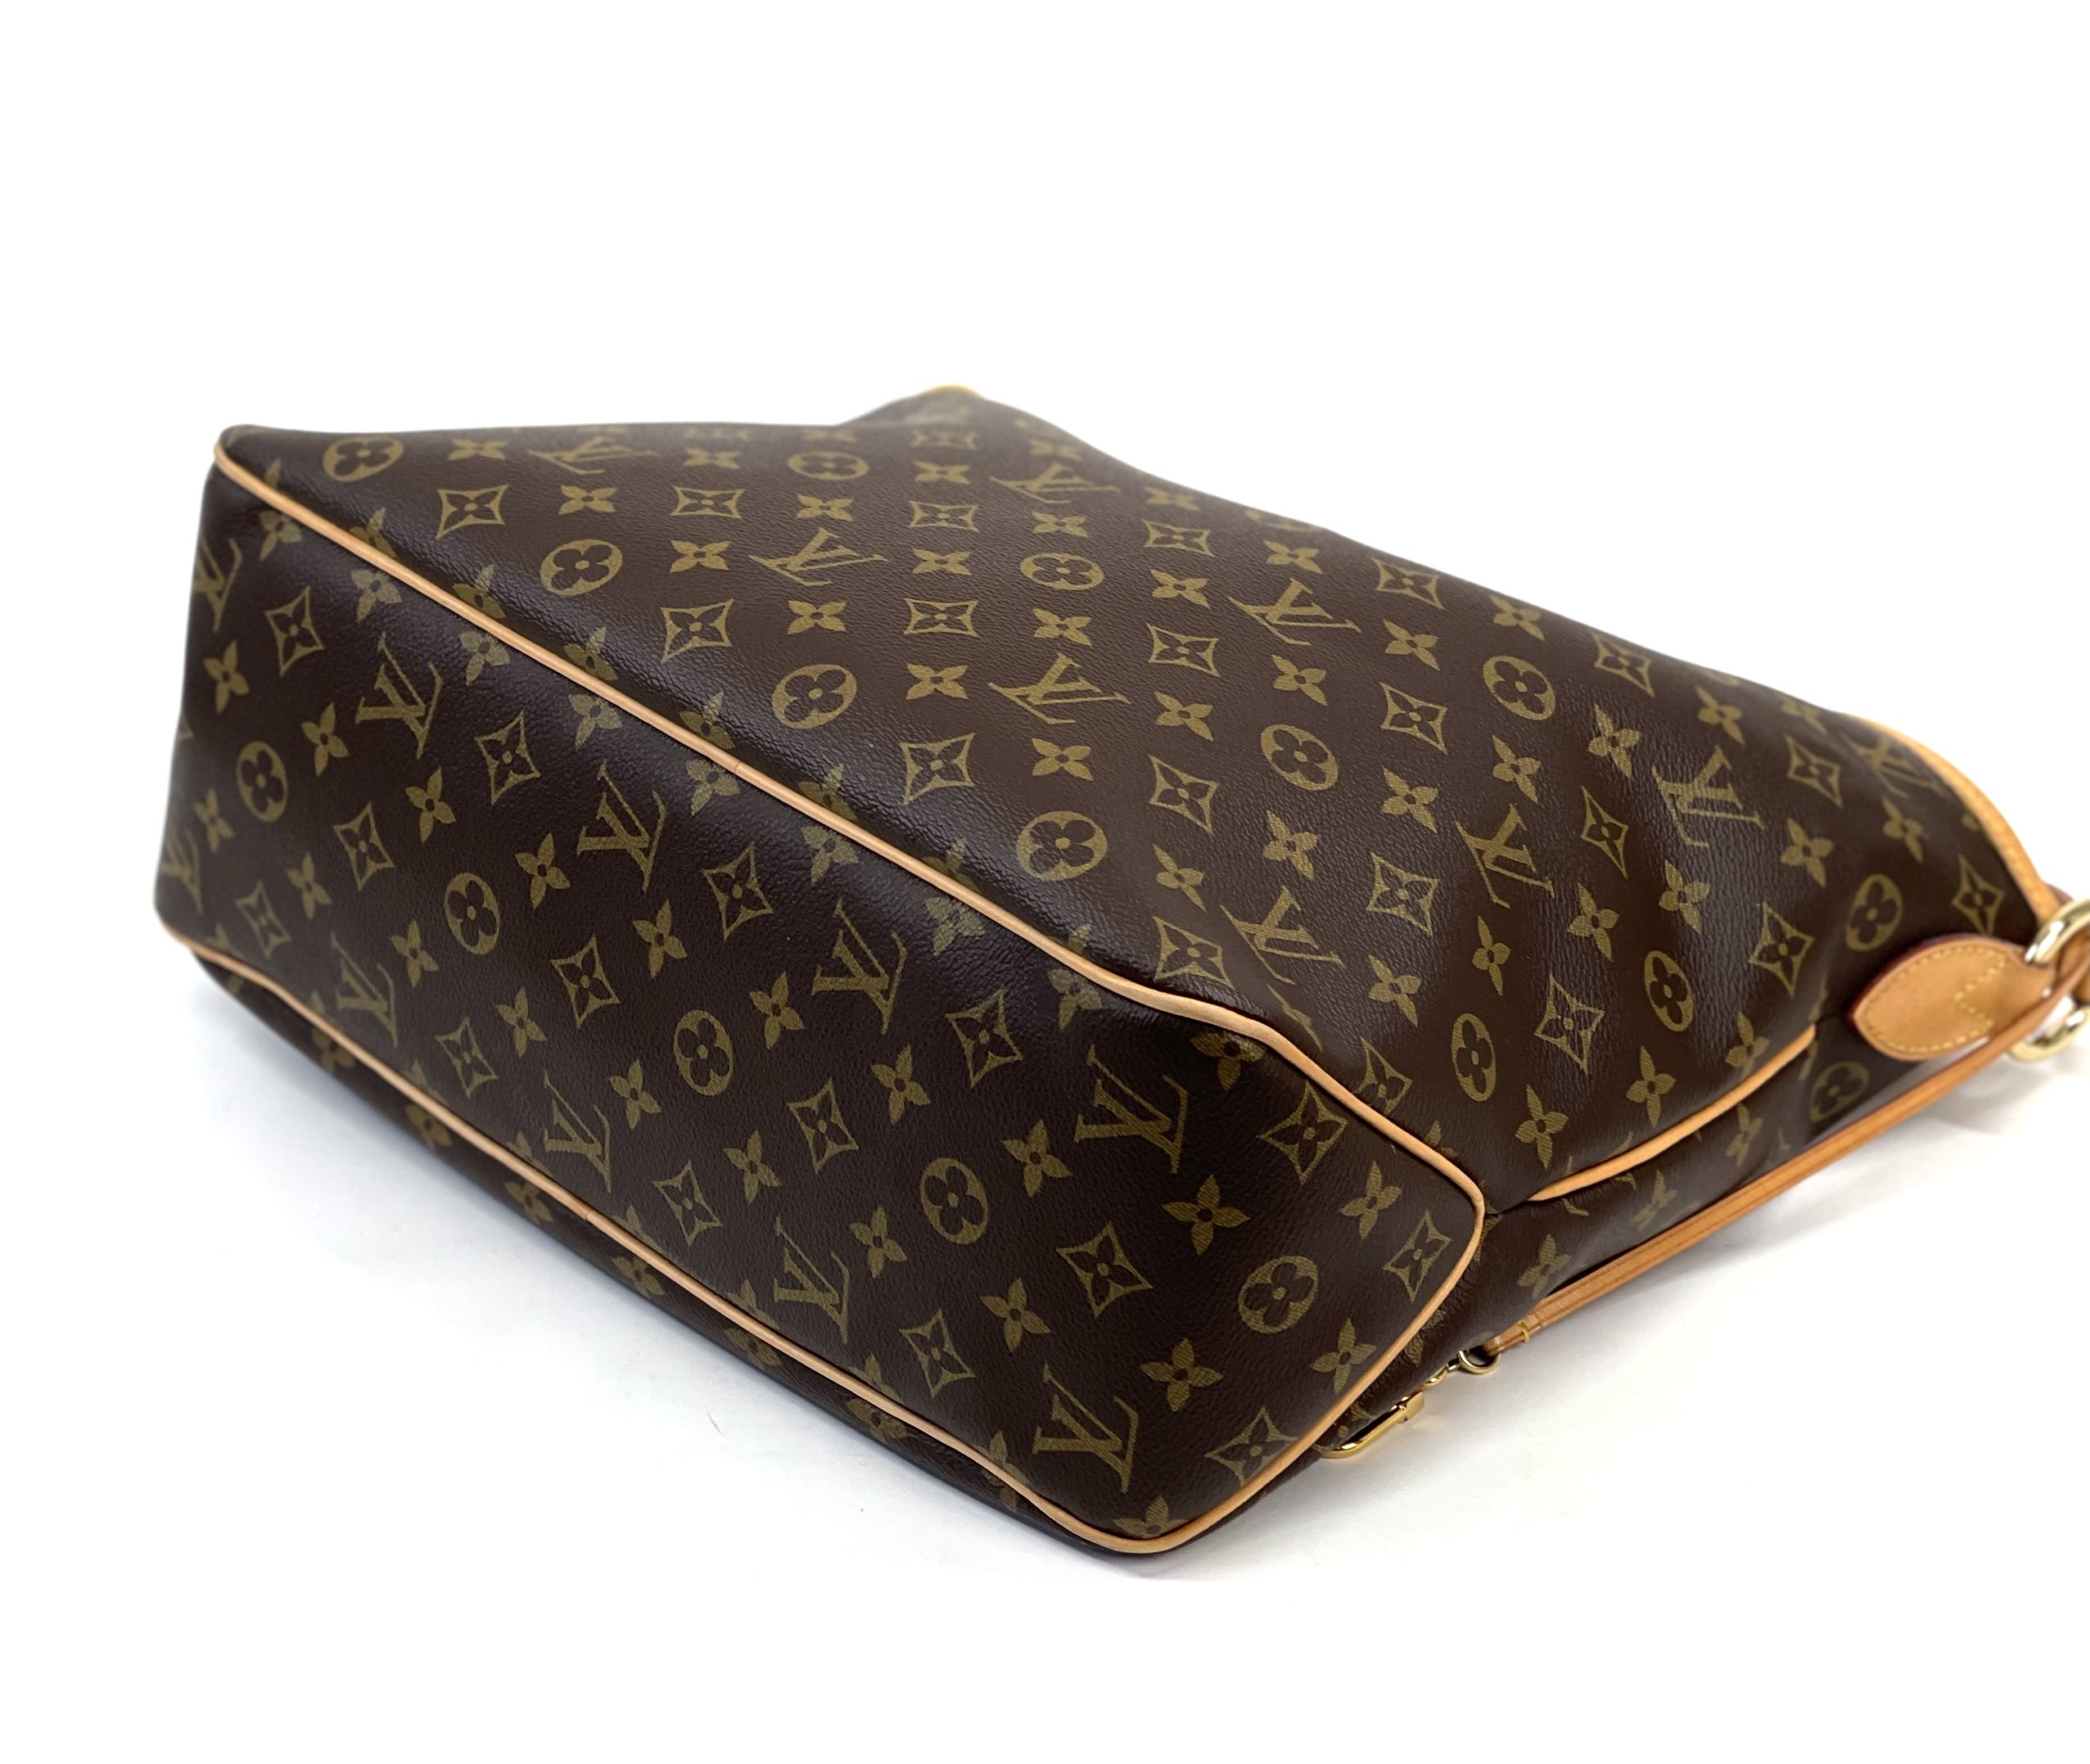 Auth Custom Louis Vuitton Delightful Boho Bag